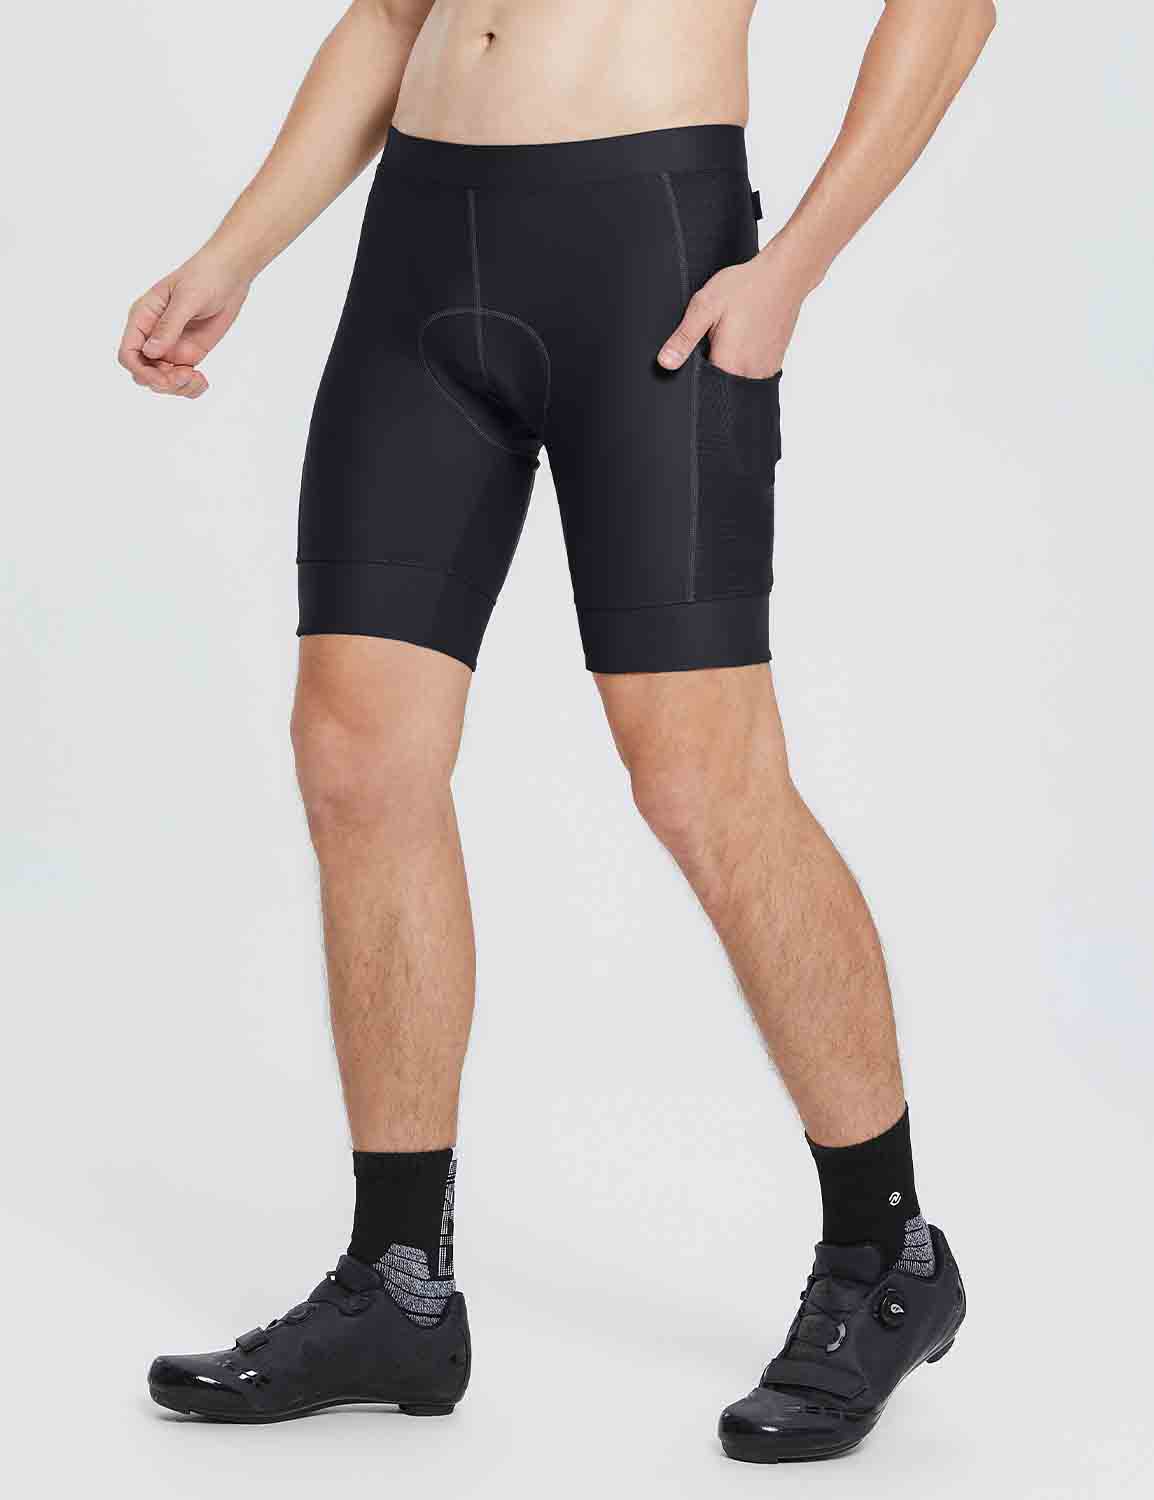  BALEAF Men's Bike Shorts with 4D Padding Cycling